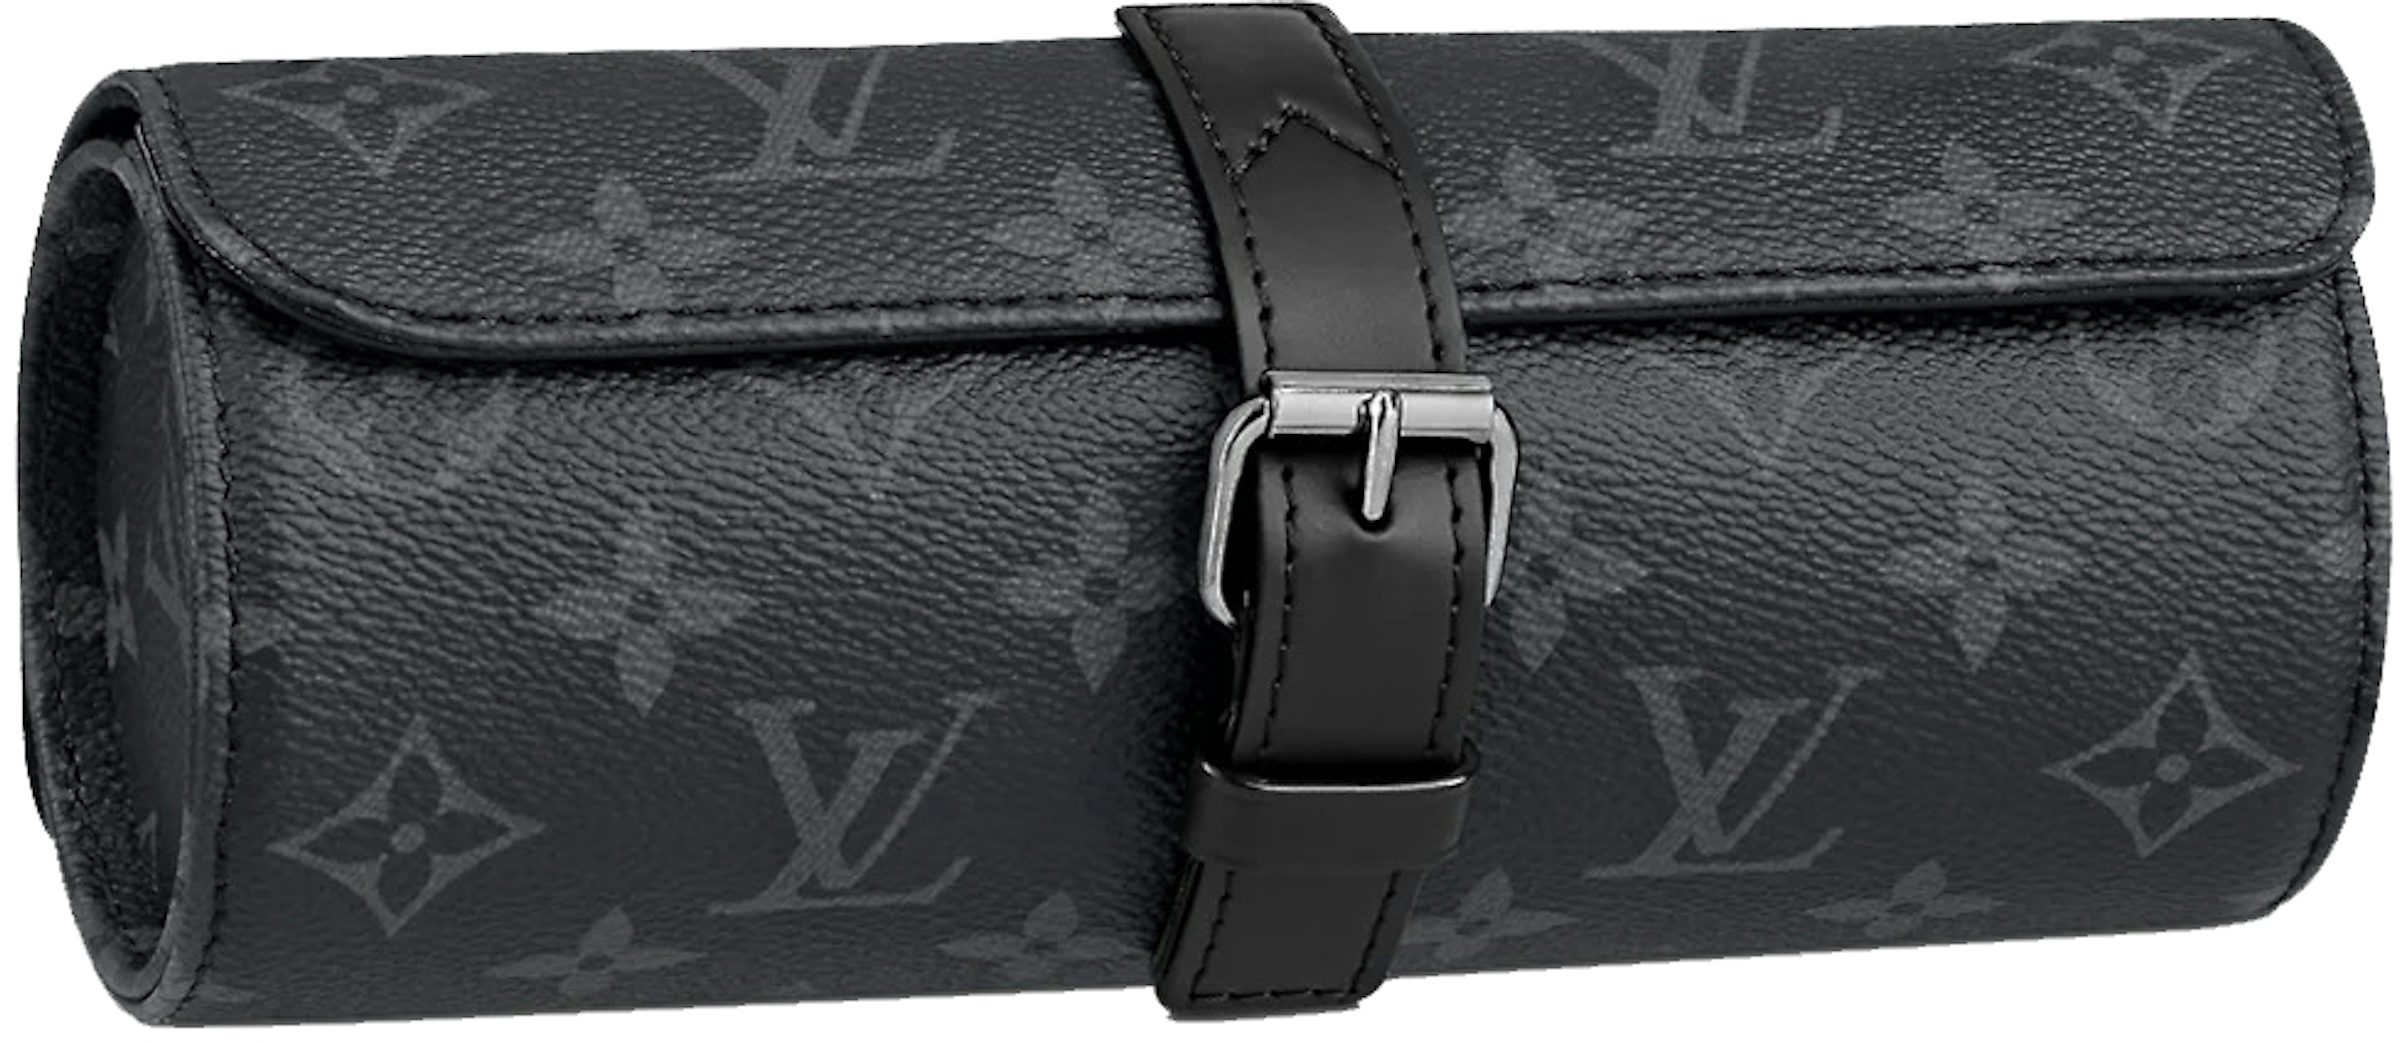 Classic Louis Vuitton iPhone 13 Mini Case